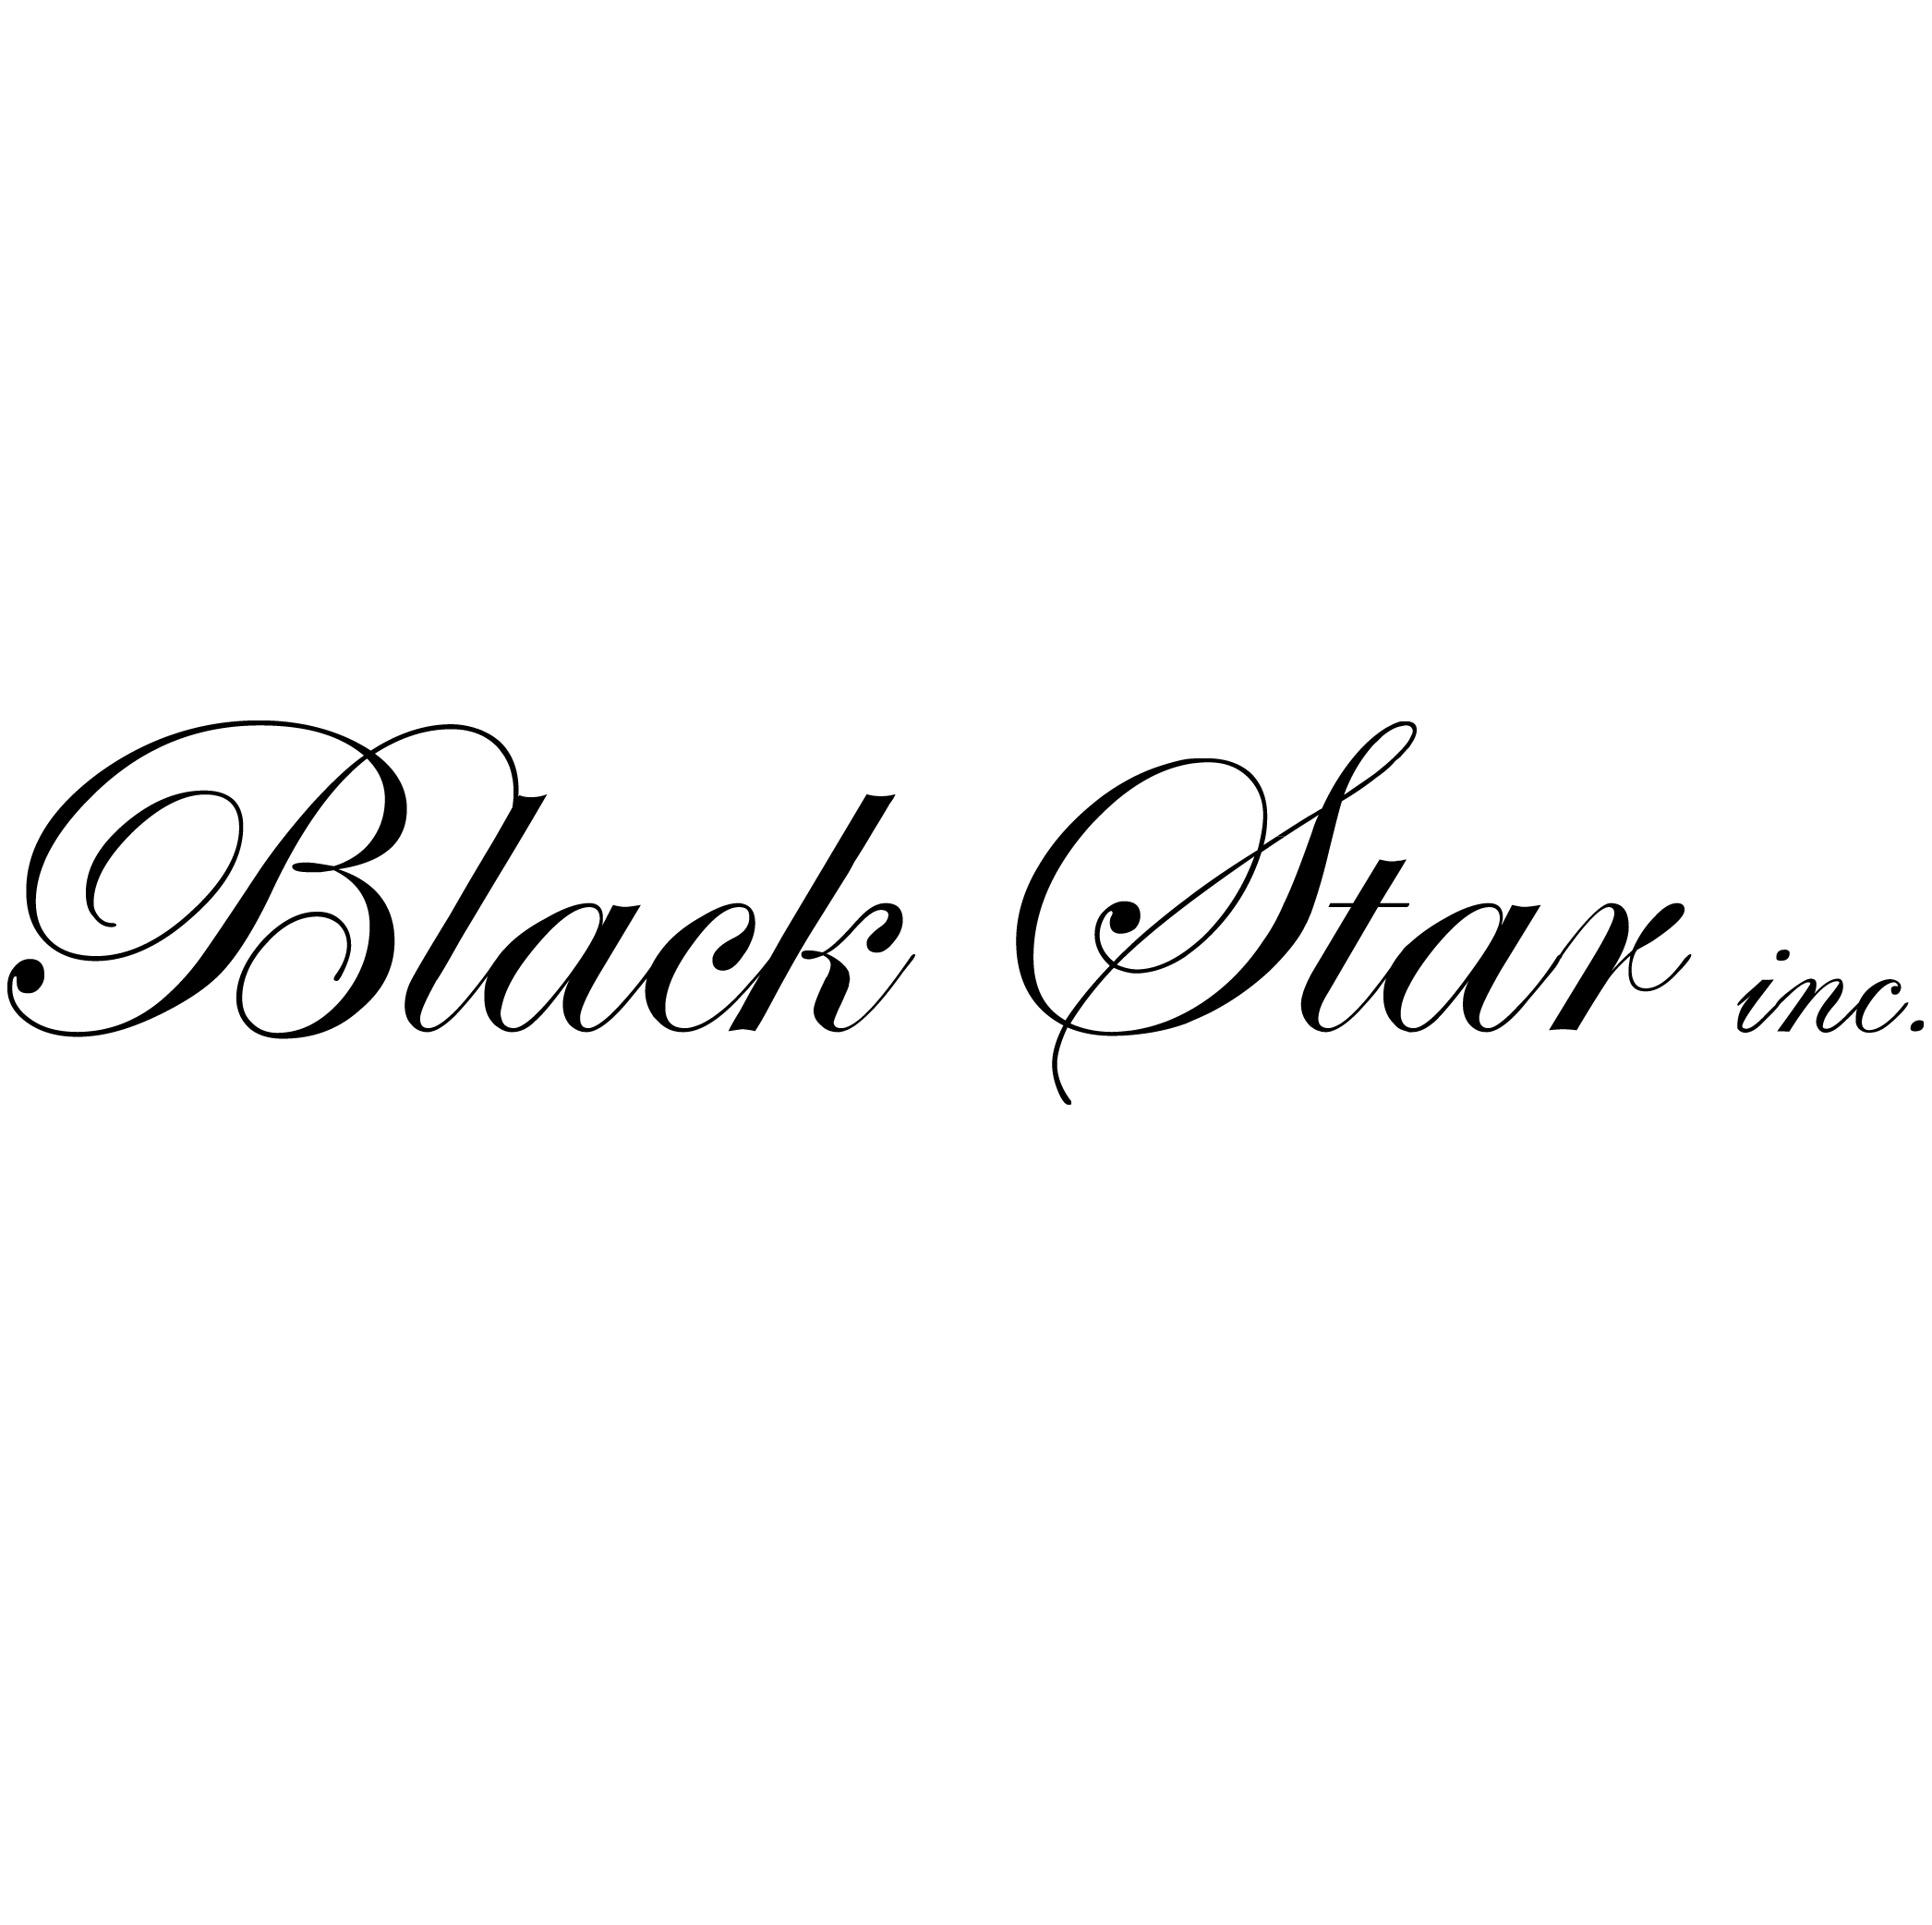 Black Star Inc. логотип. Надпись Black Star. Блэк Стар лейбл. Наклейки Блэк Стар. Star script